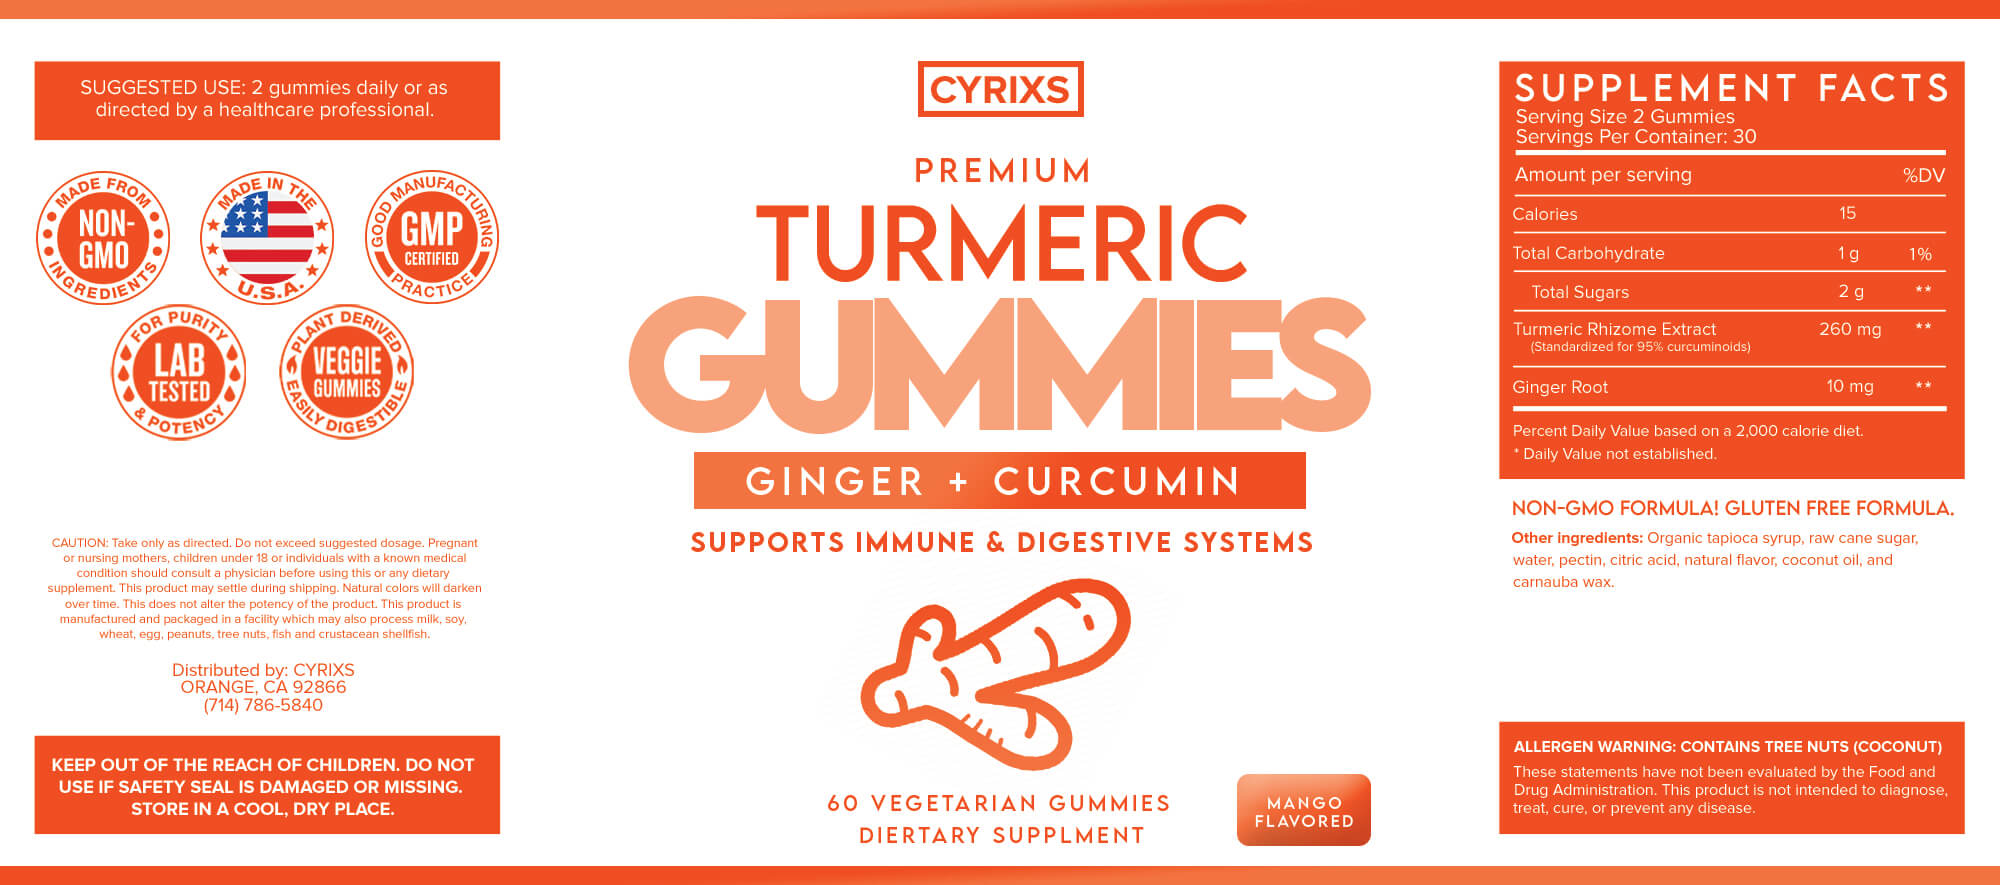 Turmeric Gummies